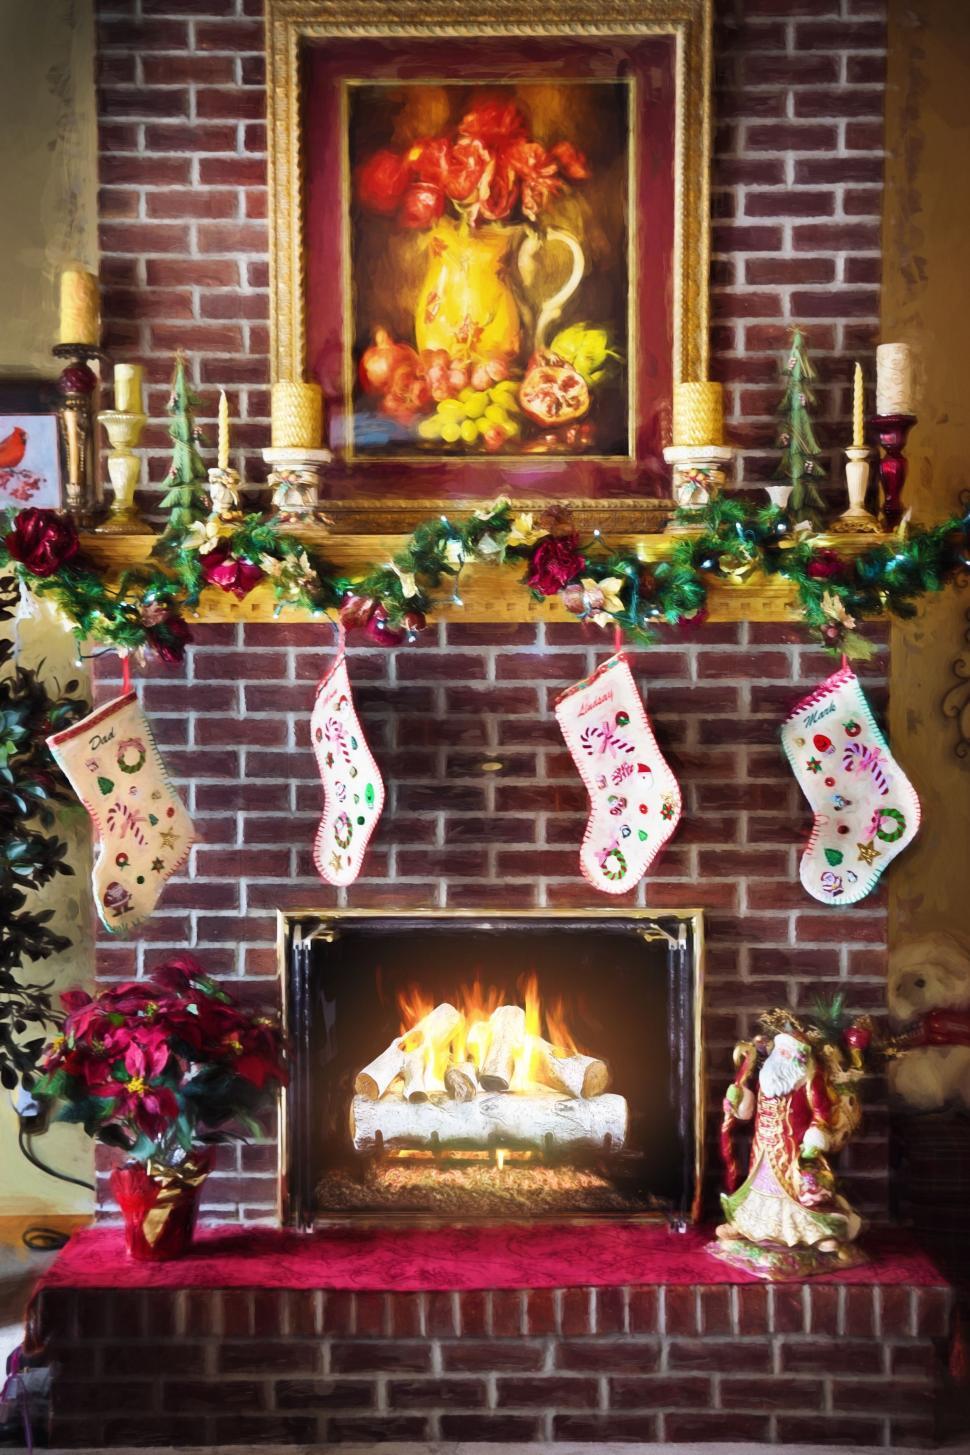 Free Image of Christmas Fireplace 